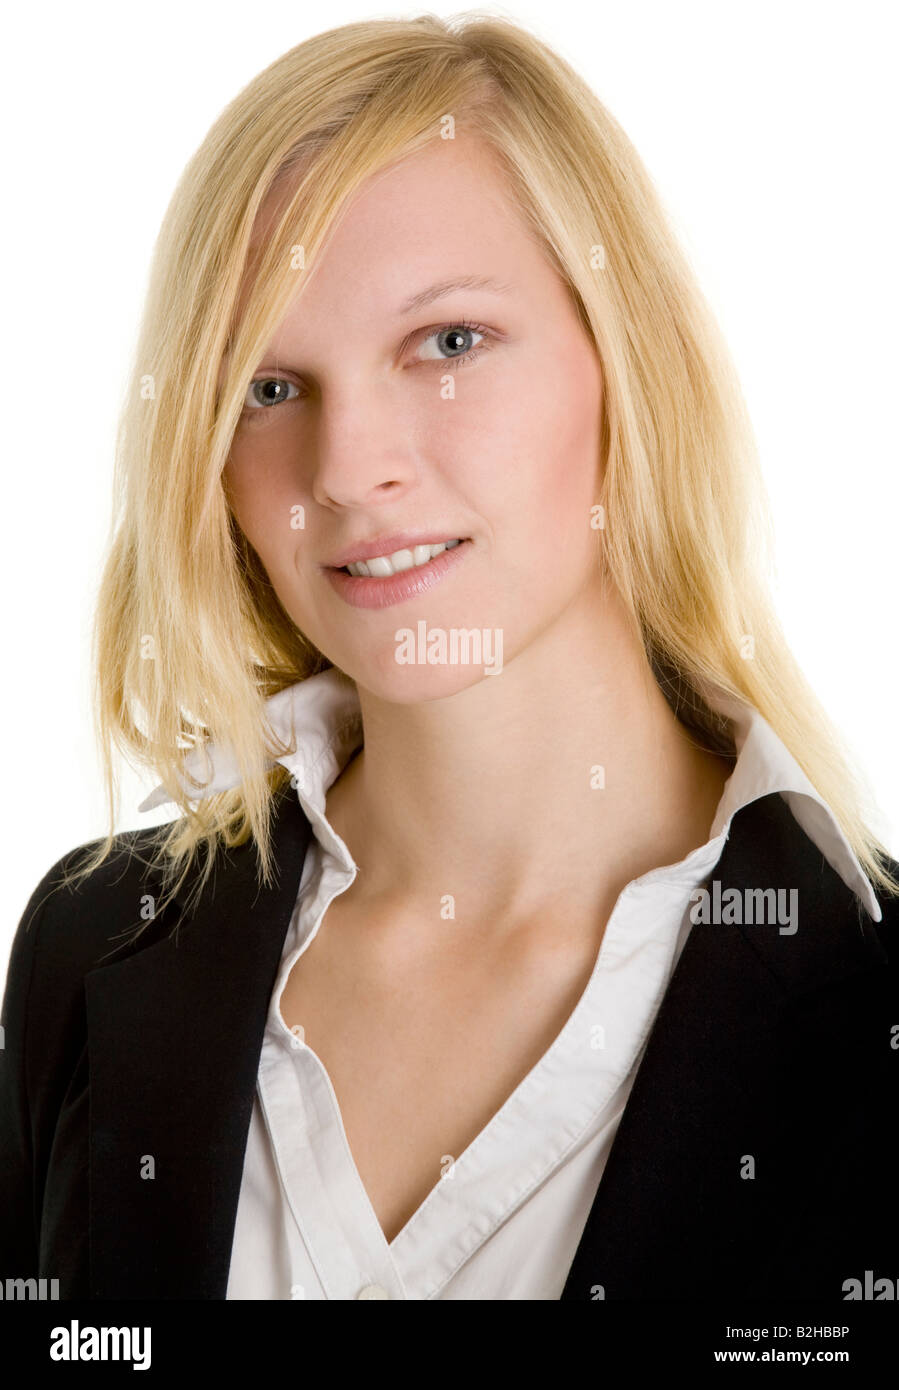 beautiful attractive portrait businesswoman woman smile smiling application photo Stock Photo